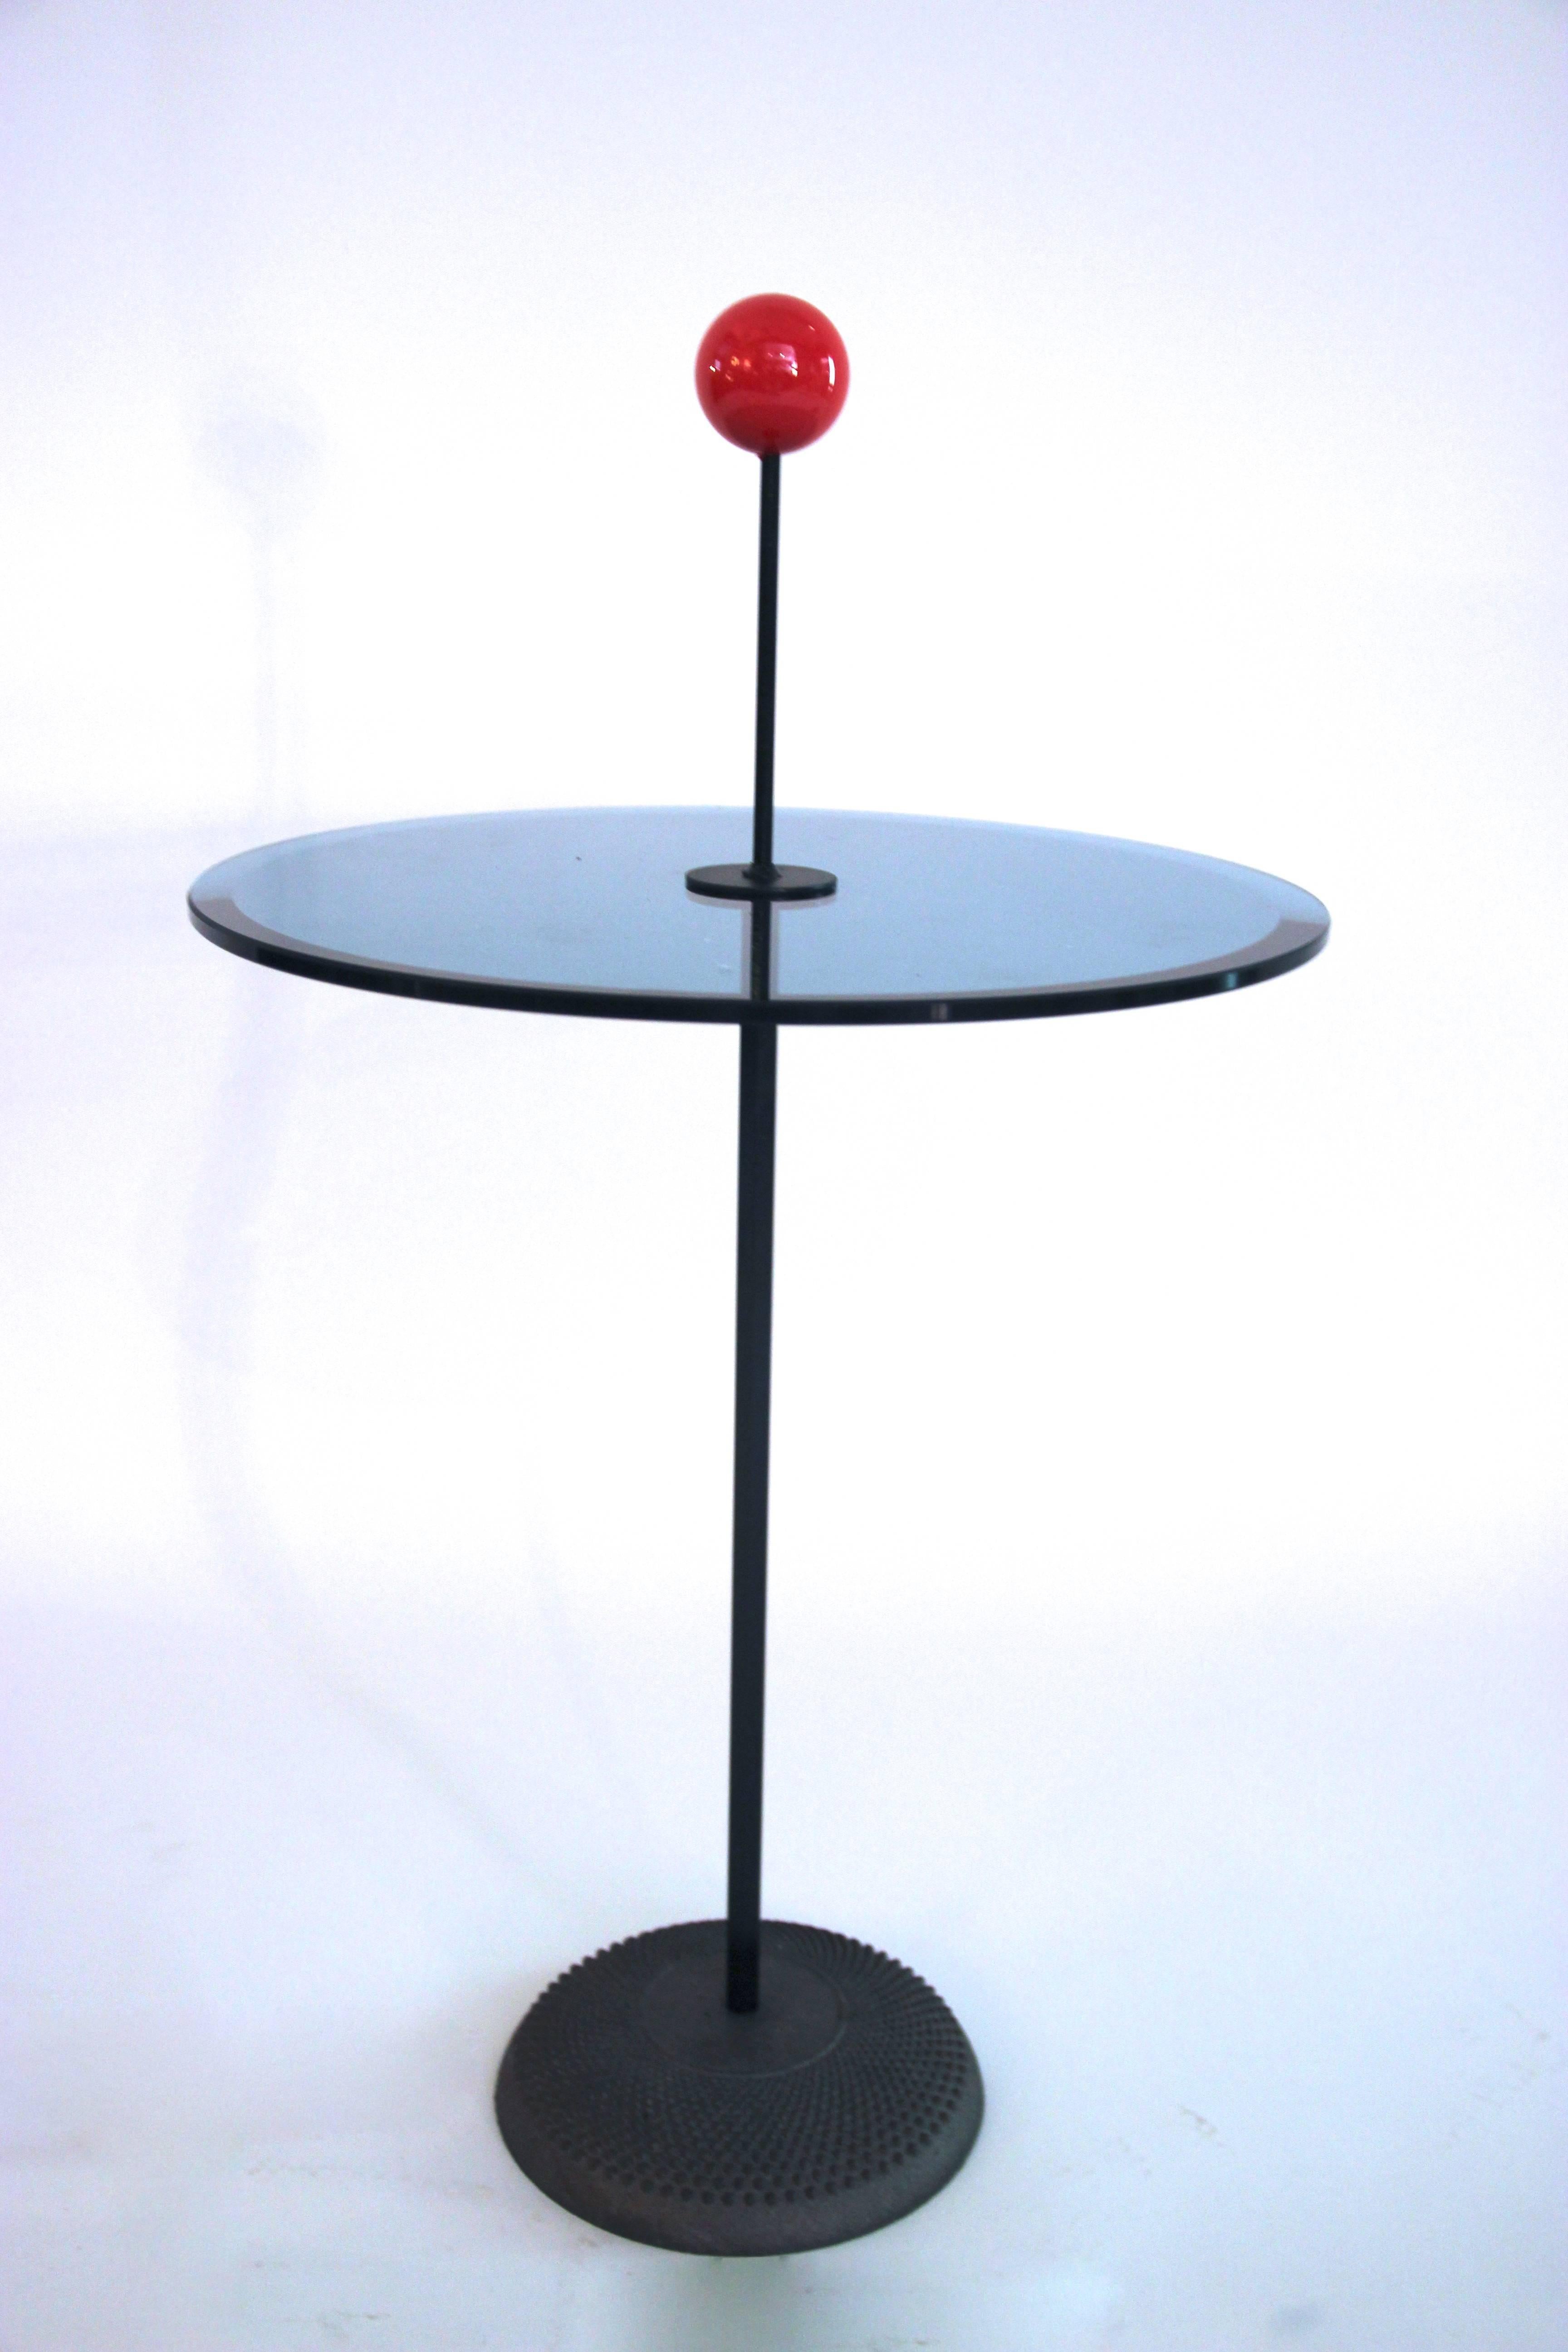 Pierluigi Cerri for Fontana Arte,
Small table, glass, lacquered metal and iron legs, 
circa 1980, Italy.
Measures: Height: 65 cm, diameter: 36 cm.